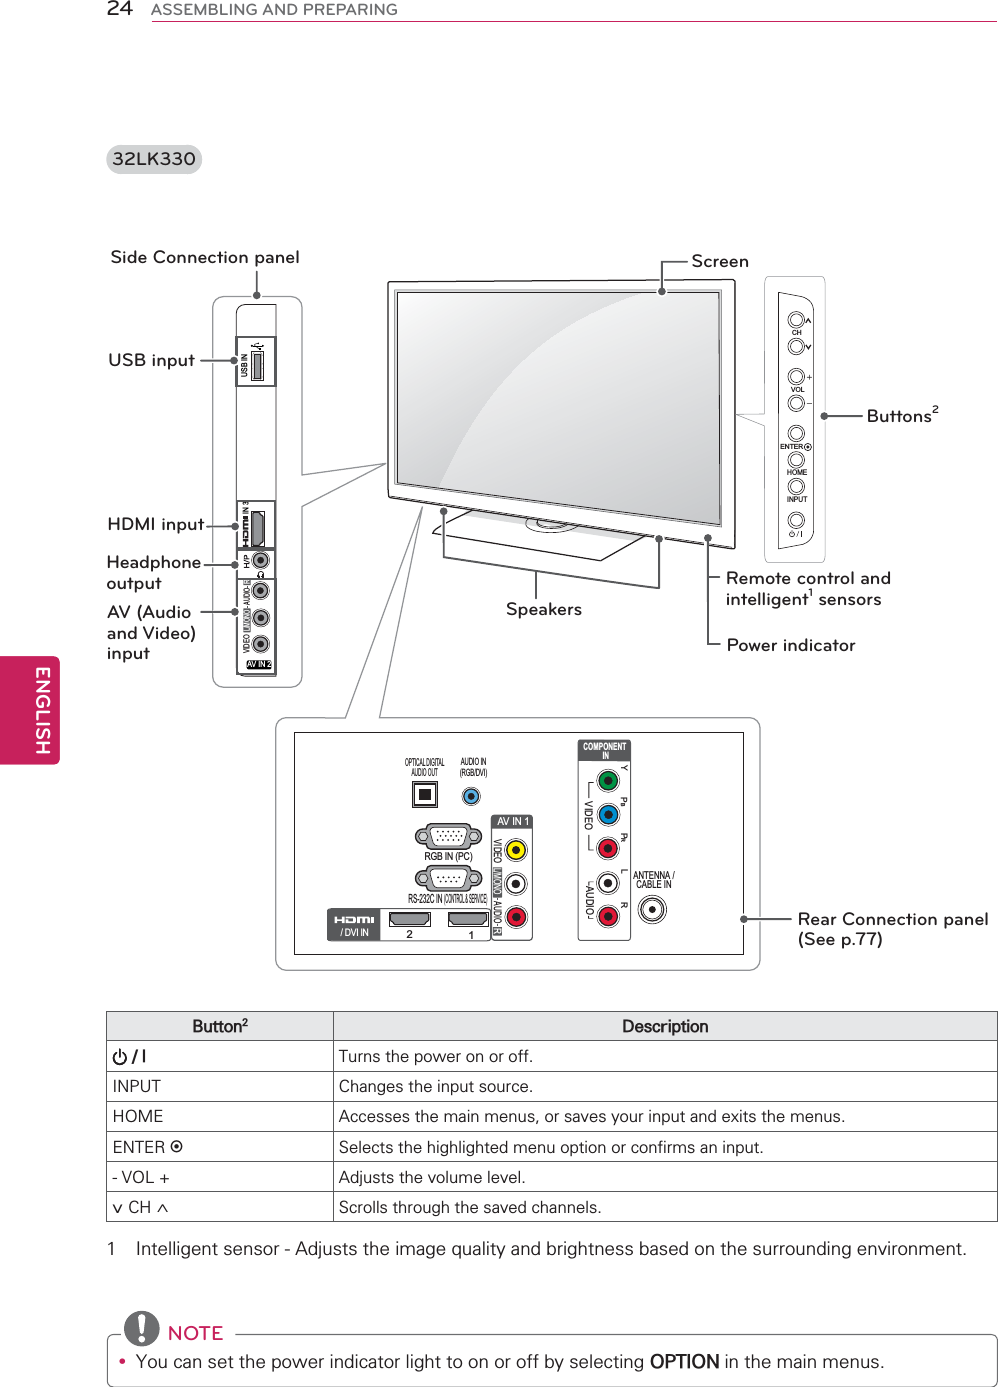 24ENGENGLISHASSEMBLING AND PREPARINGINPUTHOMEENTERCHVOLCOMPONENT INYPBPRRLVIDEOAUDIORAV IN 1L/MONOANTENNA /CABLE INRS-232C IN (CONTROL &amp; SERVICE)RGB IN (PC)OPTICAL DIGITALAUDIO OUTAUDIO IN(RGB/DVI)/ DVI IN21VIDEO AUDIOUSB INVIDEOAUDIORL/MONOIN 3AV IN 232LK330%XWWRQ&apos;HVFULSWLRQ,7XUQVWKHSRZHURQRURII,1387 &amp;KDQJHVWKHLQSXWVRXUFH+20( $FFHVVHVWKHPDLQPHQXVRUVDYHV\RXULQSXWDQGH[LWVWKHPHQXV(17(5ٜ6HOHFWVWKHKLJKOLJKWHGPHQXRSWLRQRUFRQILUPVDQLQSXW92/ $GMXVWVWKHYROXPHOHYHOY&amp;+A6FUROOVWKURXJKWKHVDYHGFKDQQHOVUSB inputHDMI inputHeadphone outputAV (Audio and Video) inputSide Connection panel ScreenSpeakersPower indicatorRemote control and intelligent1 sensorsRear Connection panel(See p.77)Buttons2 NOTEy &lt;RXFDQVHWWKHSRZHULQGLFDWRUOLJKWWRRQRURIIE\VHOHFWLQJ237,21LQWKHPDLQPHQXV ,QWHOOLJHQWVHQVRU$GMXVWVWKHLPDJHTXDOLW\DQGEULJKWQHVVEDVHGRQWKHVXUURXQGLQJHQYLURQPHQW